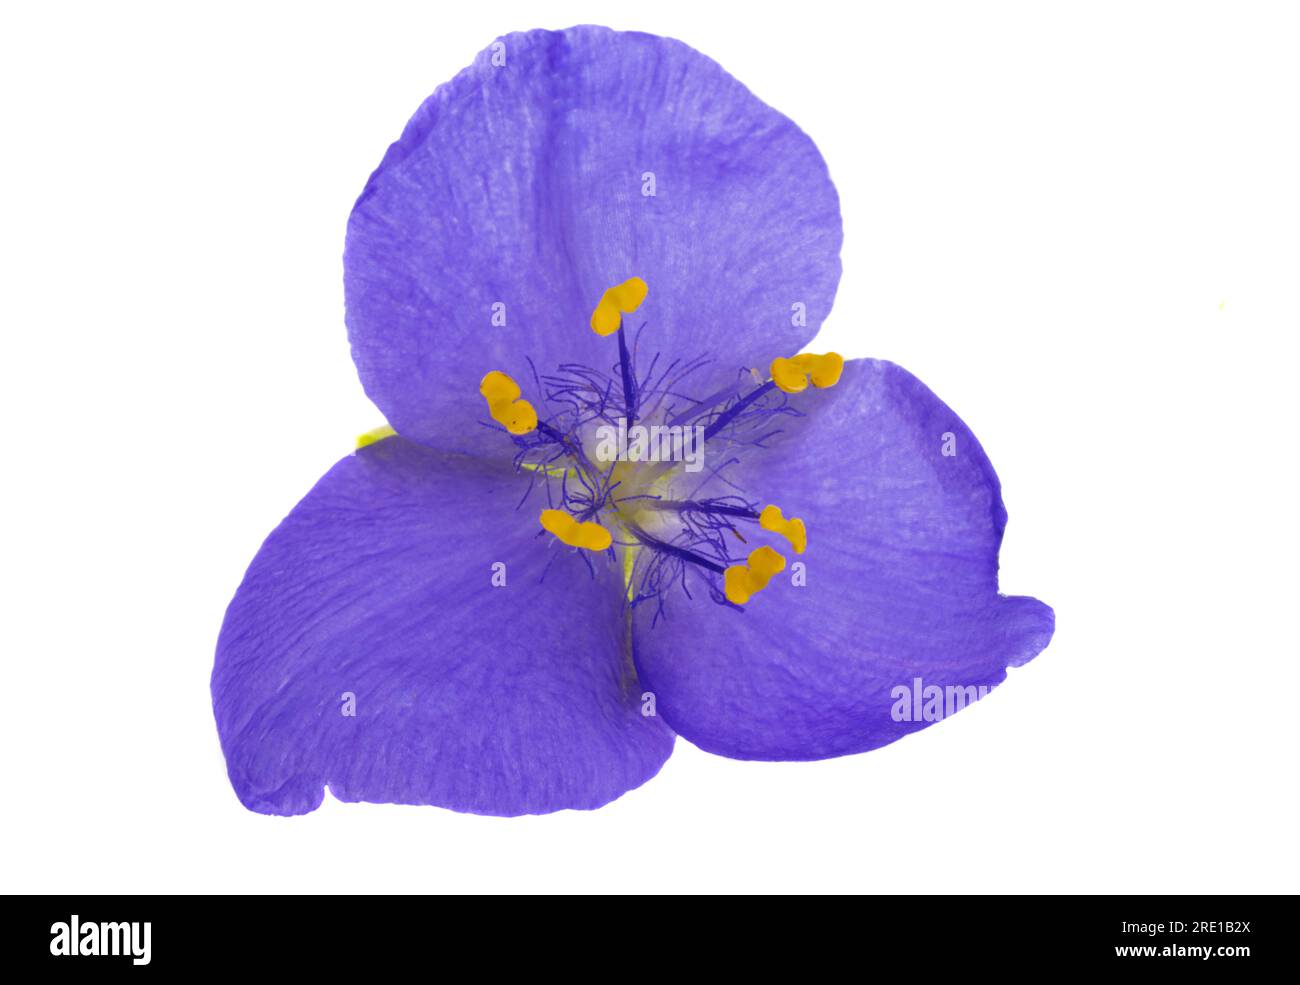 tradescantia flower isolated on white background Stock Photo